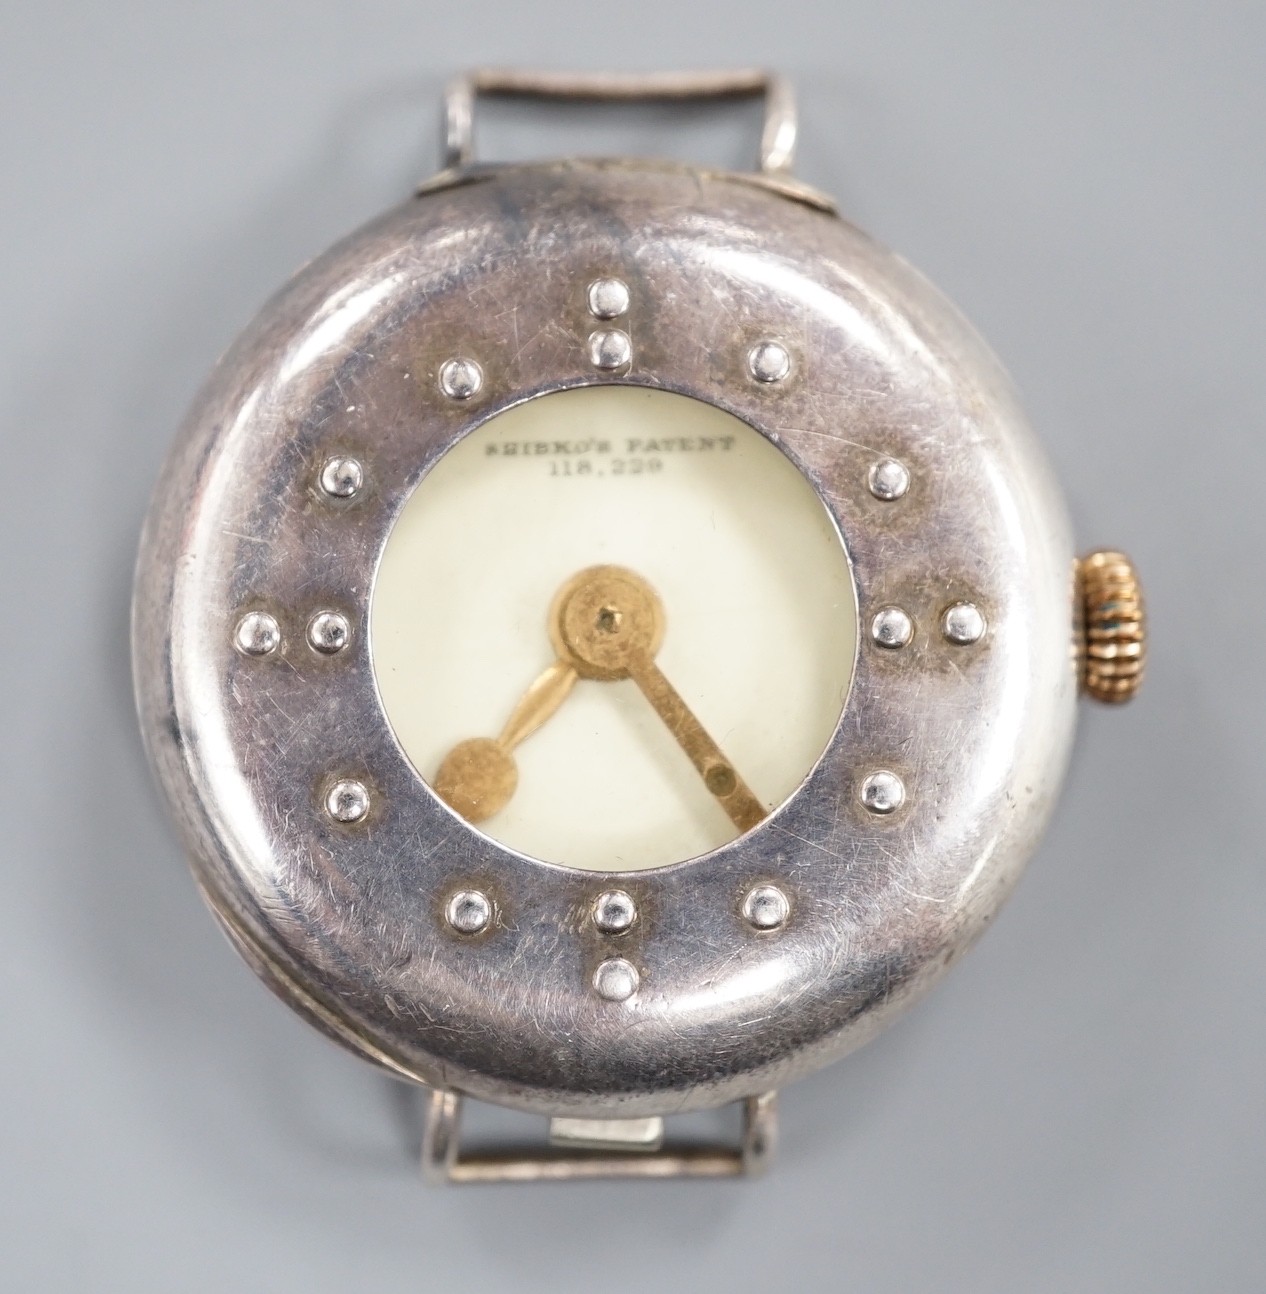 A gentleman's silver Shibko's patent Braille dial manual wind wrist watch, no strap.